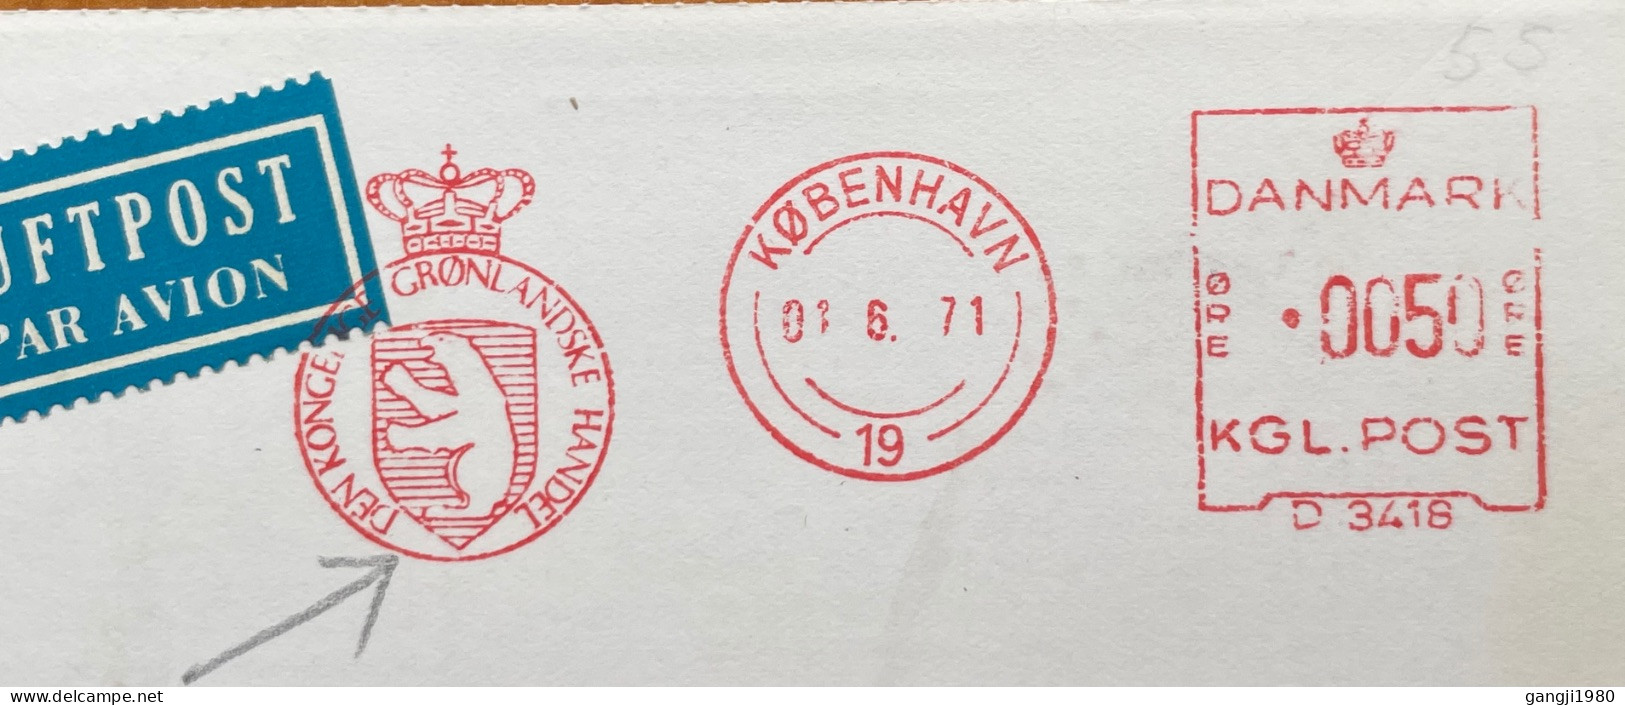 GREENLAND-DENMARK 1971, MACHINE SLOGAN, BEAR ANIMAL, METER SLOGAN ON PHILATELIC INFORMATION CARD, USED TO USA. - Briefe U. Dokumente